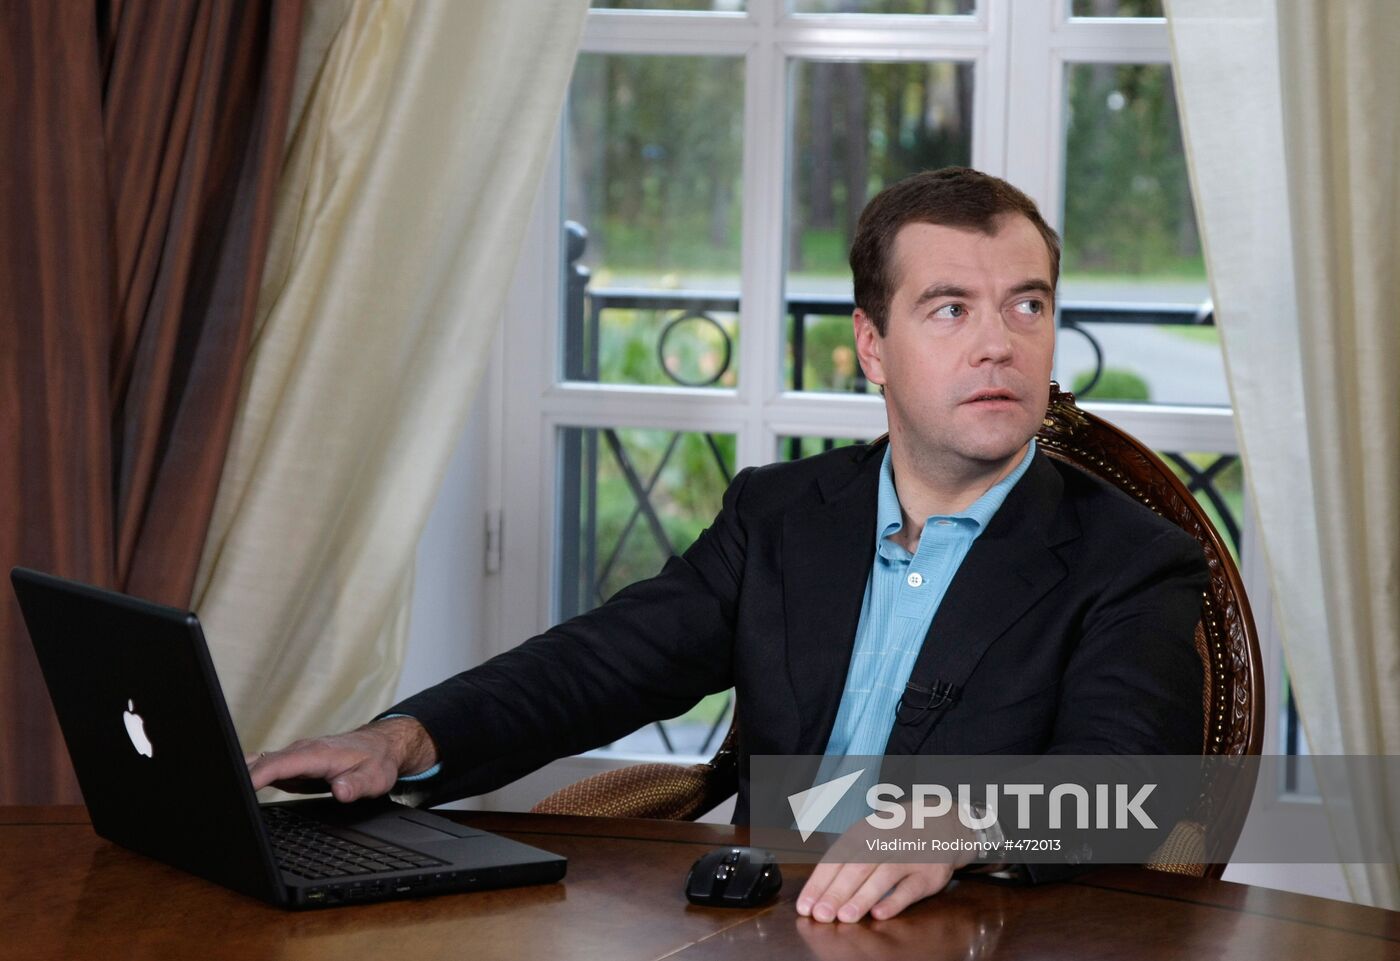 Dmitry Medvedev recording new video-blog entry